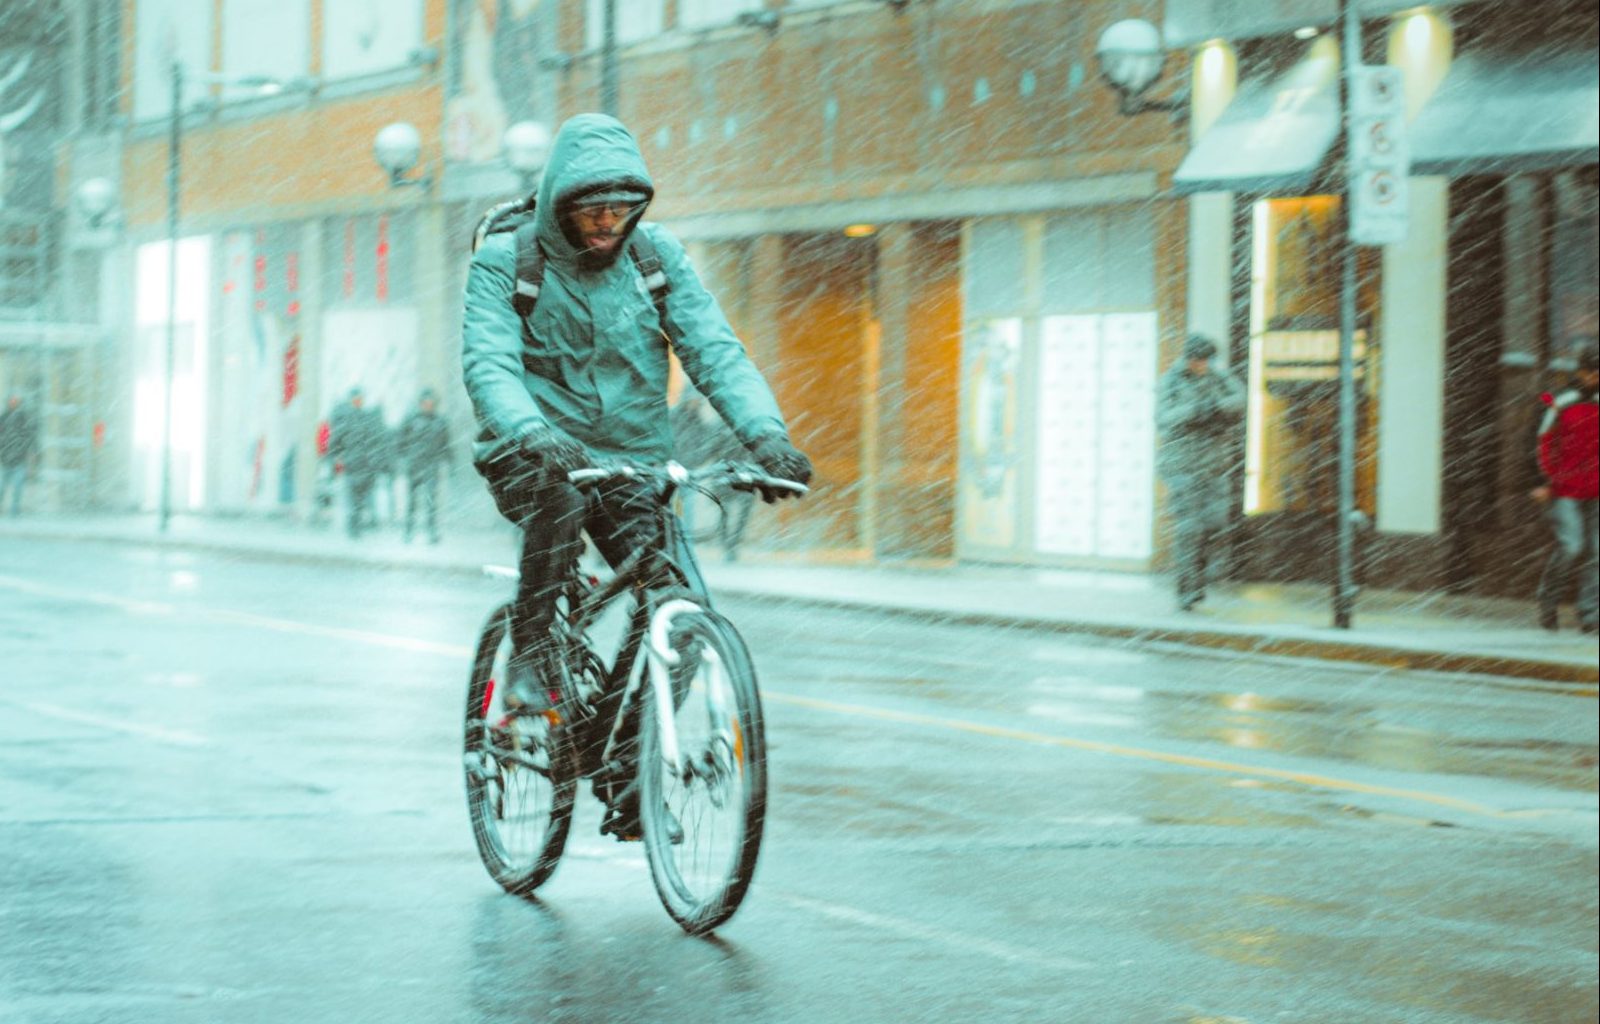 Cycling in the rain; photo by Juan Rojas on Unsplash